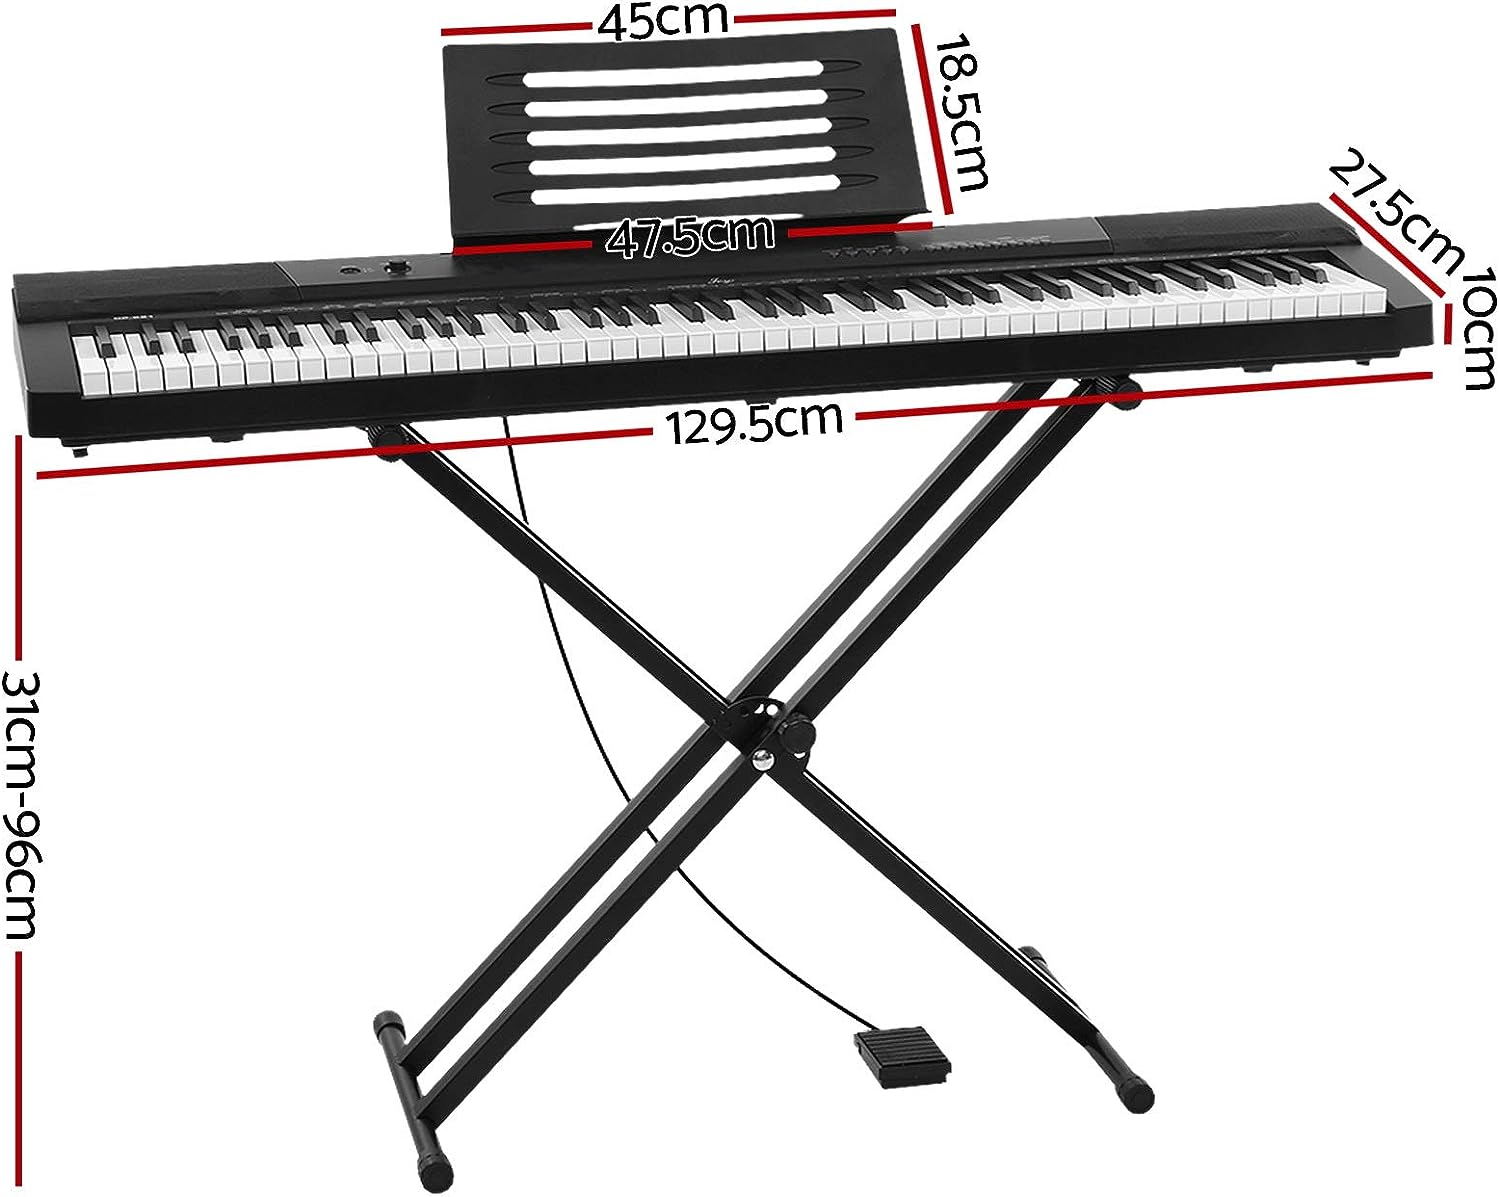 Buy Beginners Piano Keyboard online